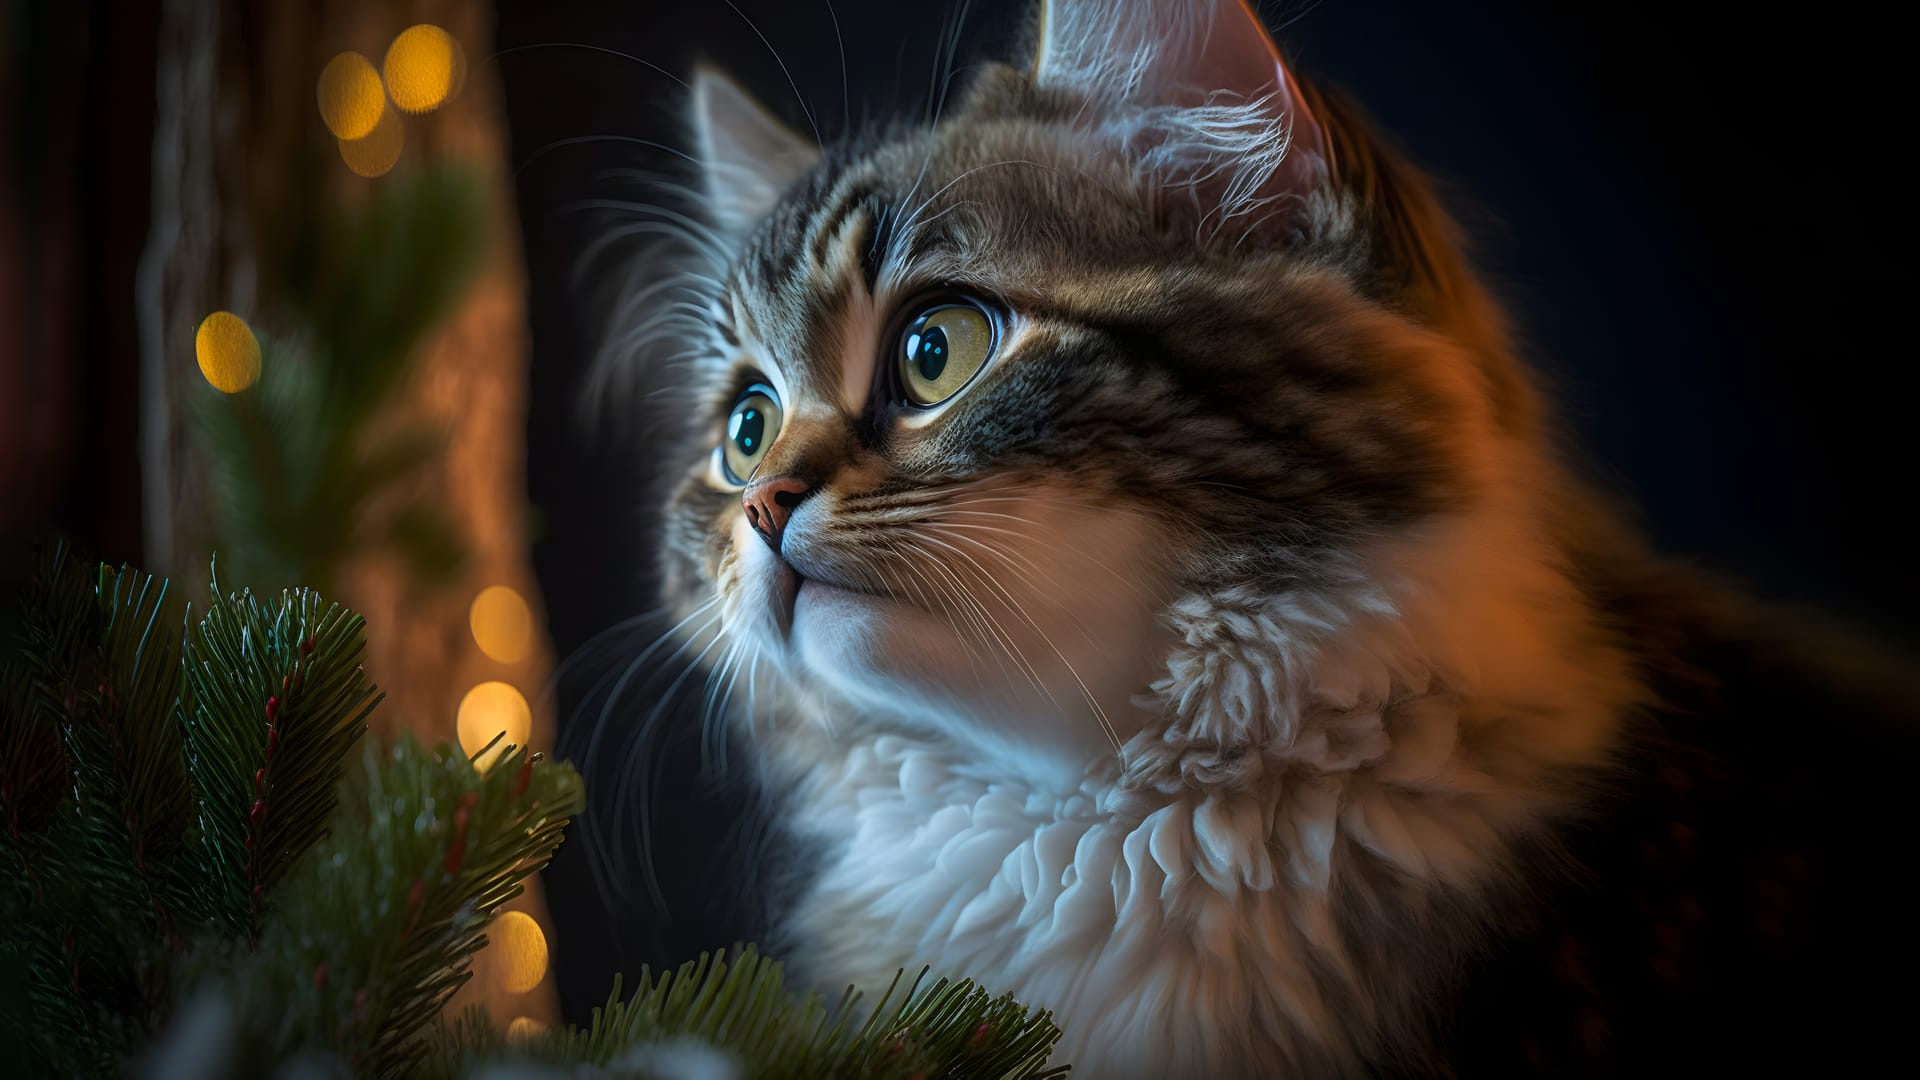 Cat profile picturecute tabby kitten looking christmas tree art